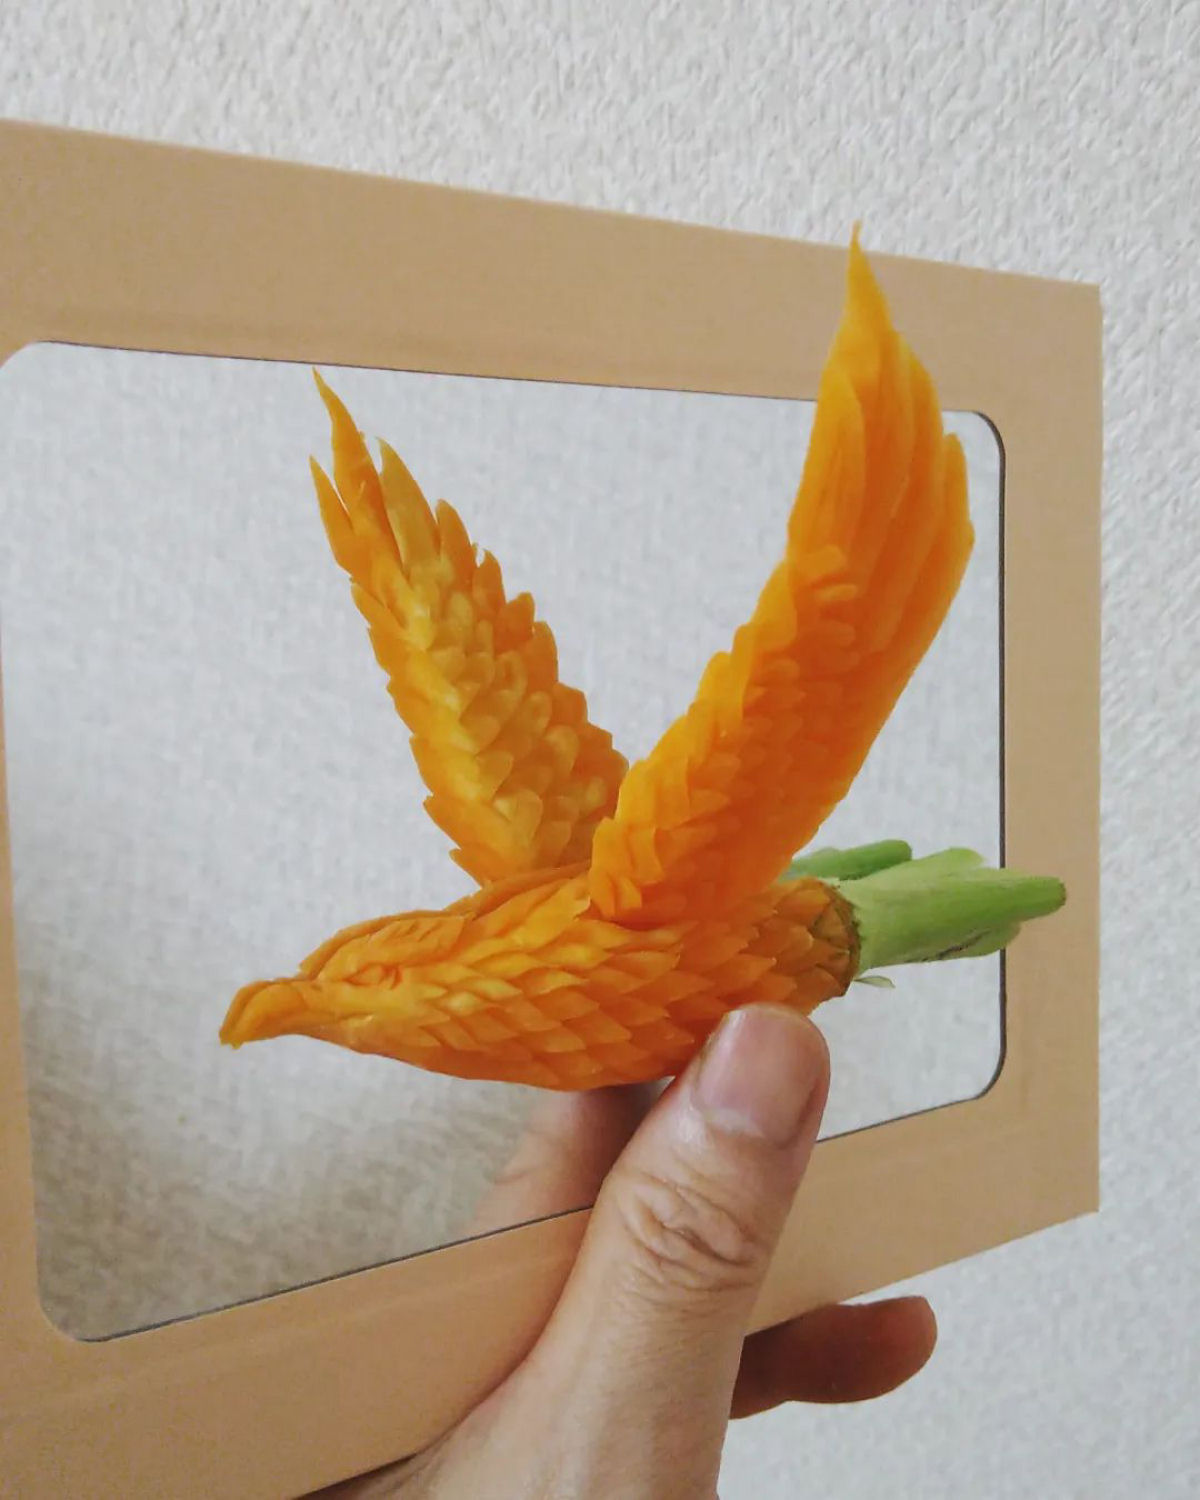 Escultor japons transforma frutas e legumes  em esculturas comestveis brilhantes 06